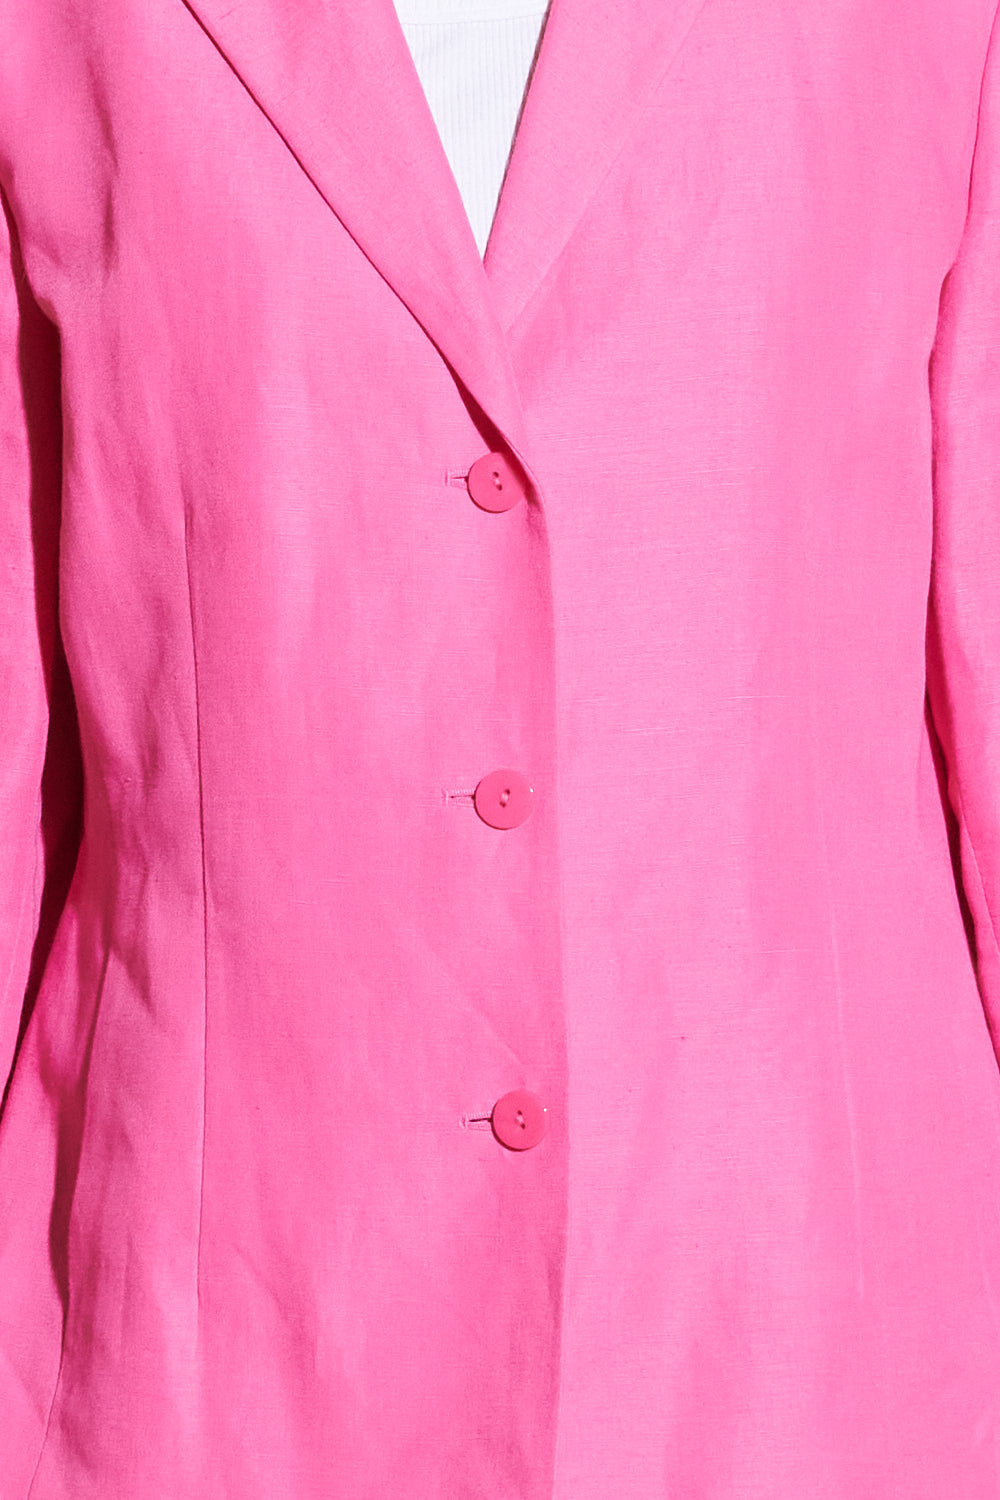 Vintage Bubblegum Pink Blazer, Sz Large